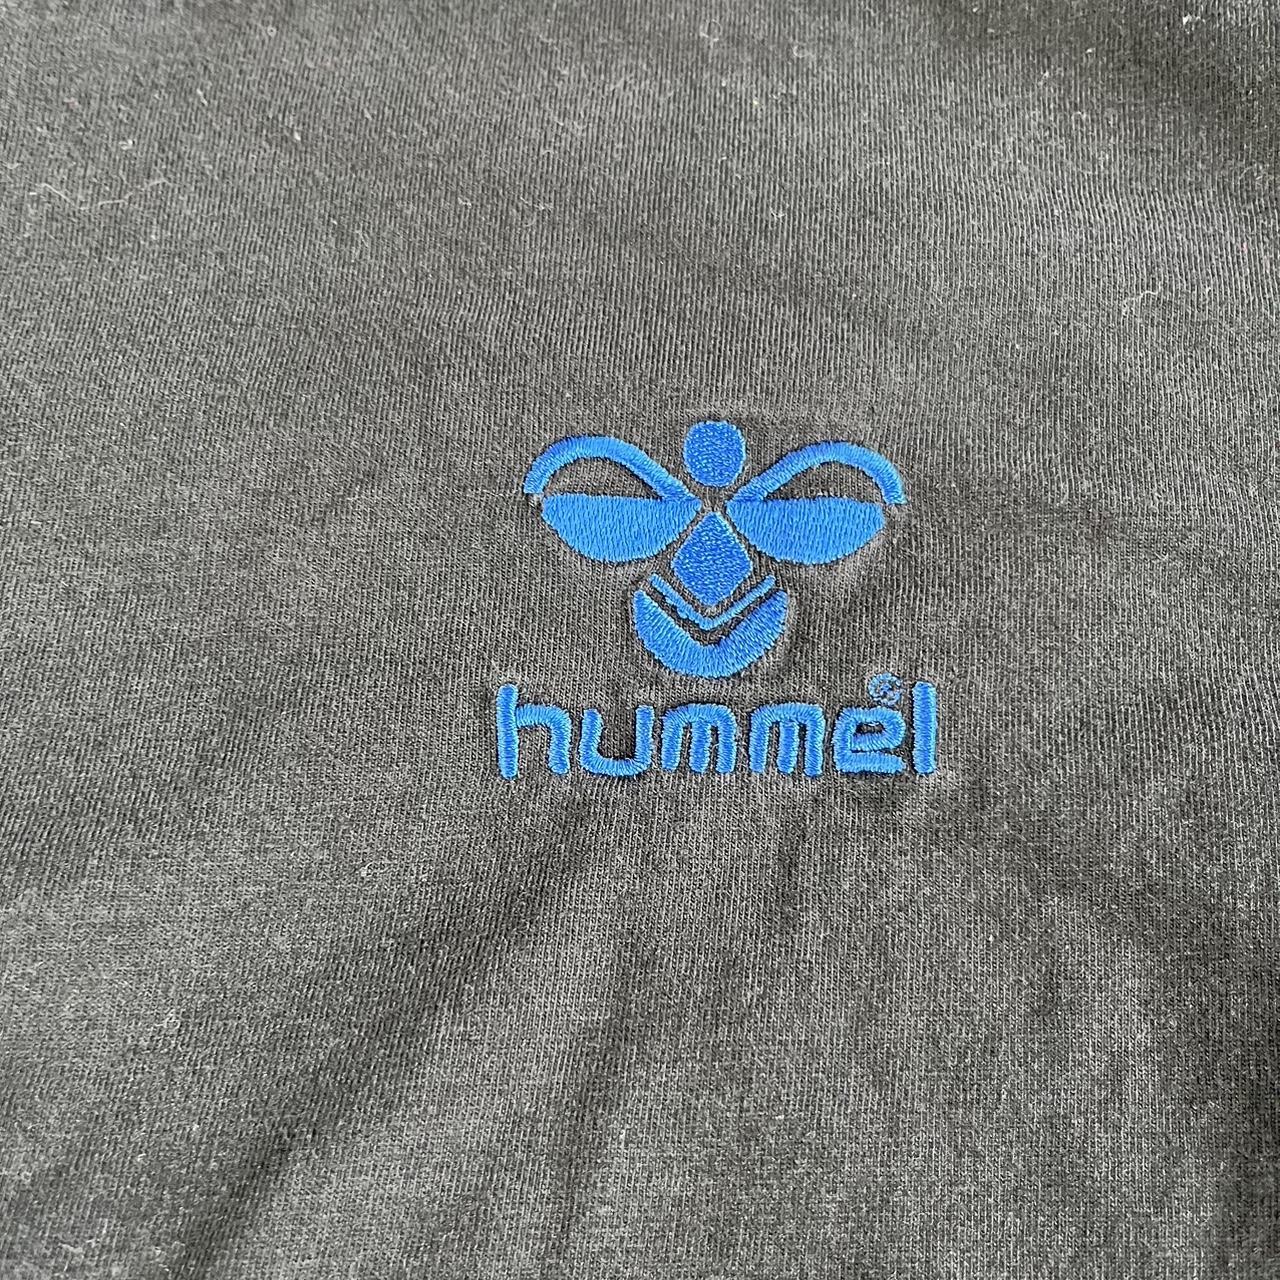 Hummel Men's Black and Blue Shirt (2)